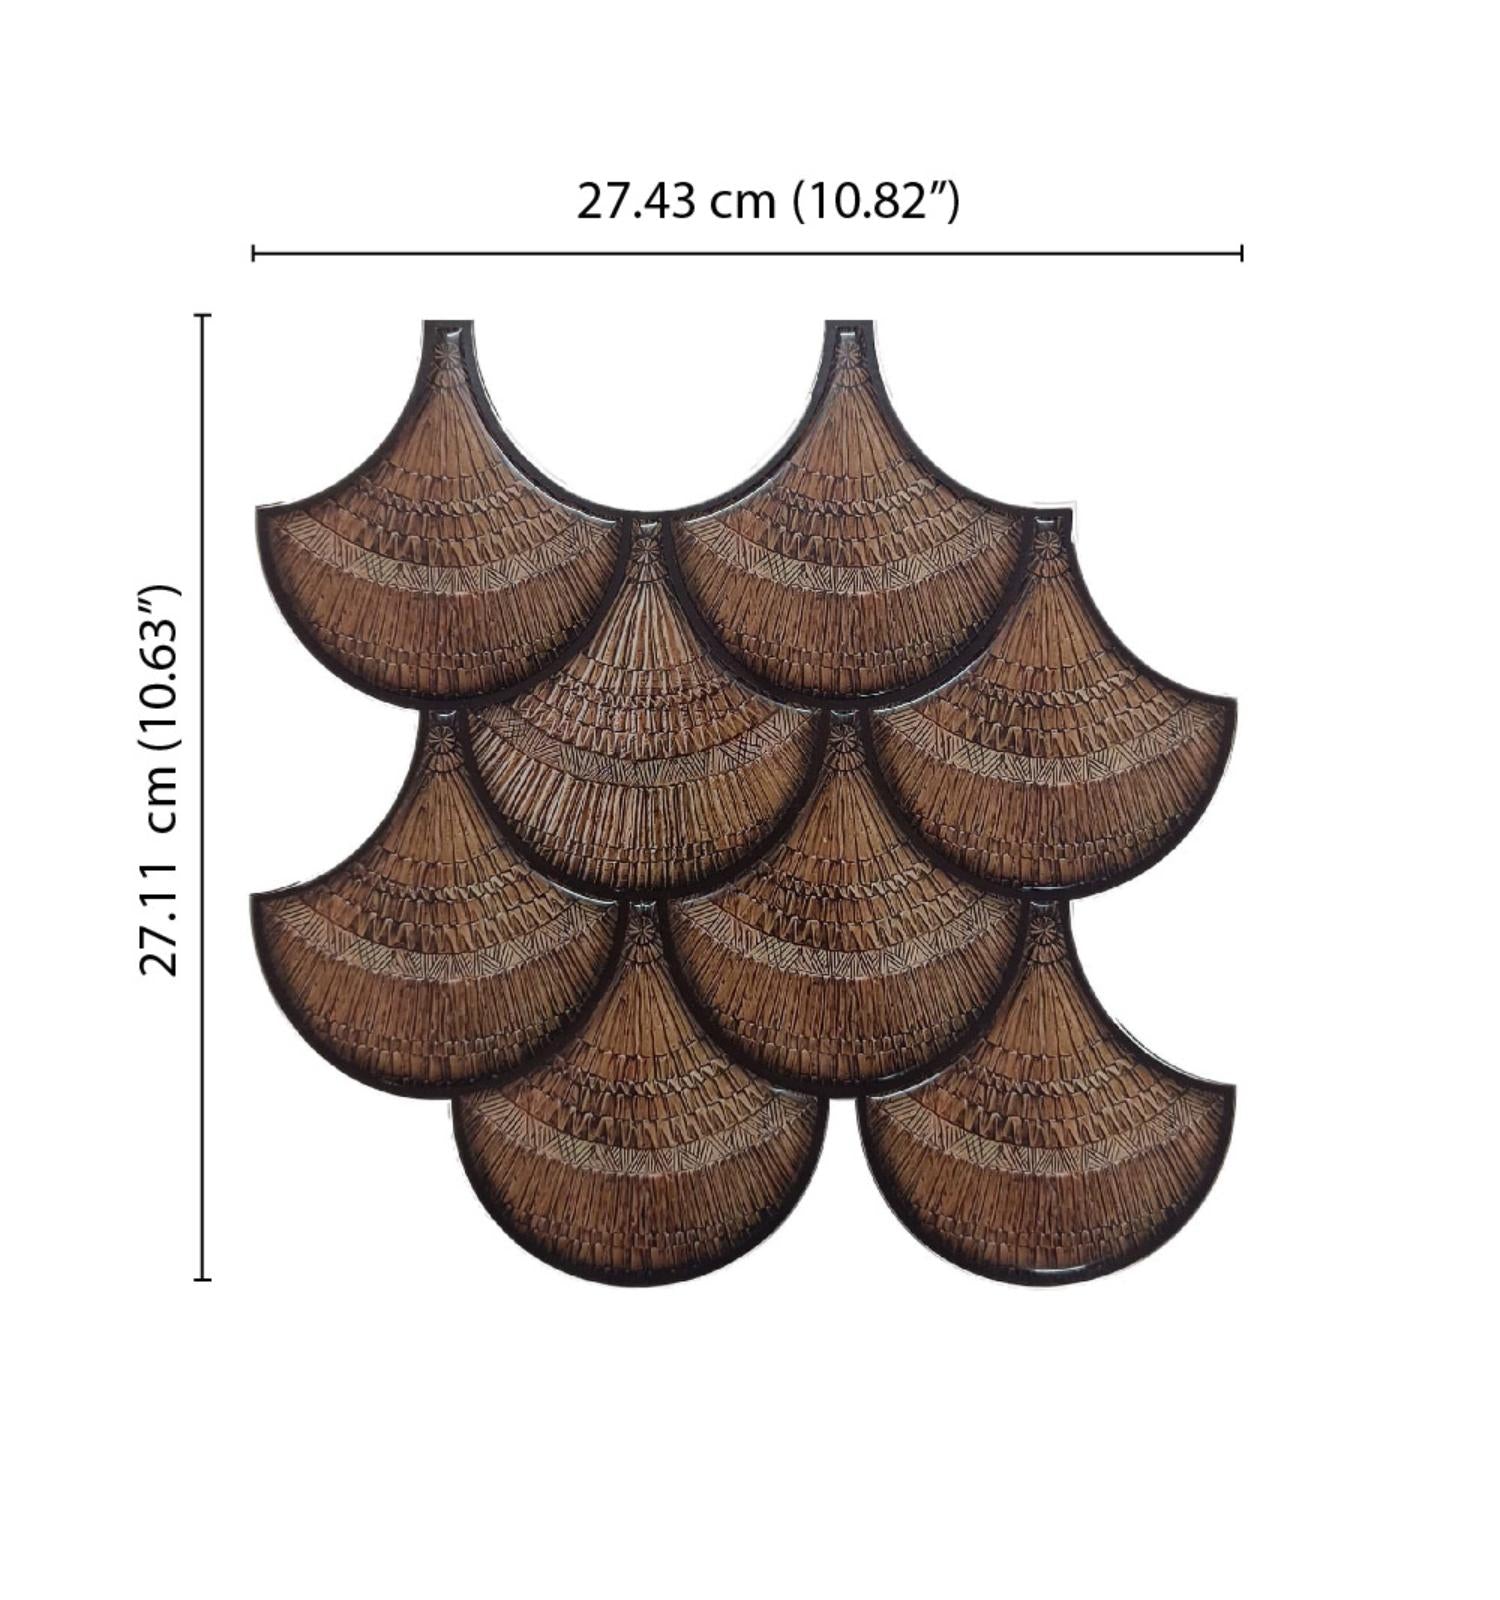 Brown Fishscale Peel and Stick Wall Tile | Kitchen Backsplash Tiles | Self Adhesive Tiles For Home Decor